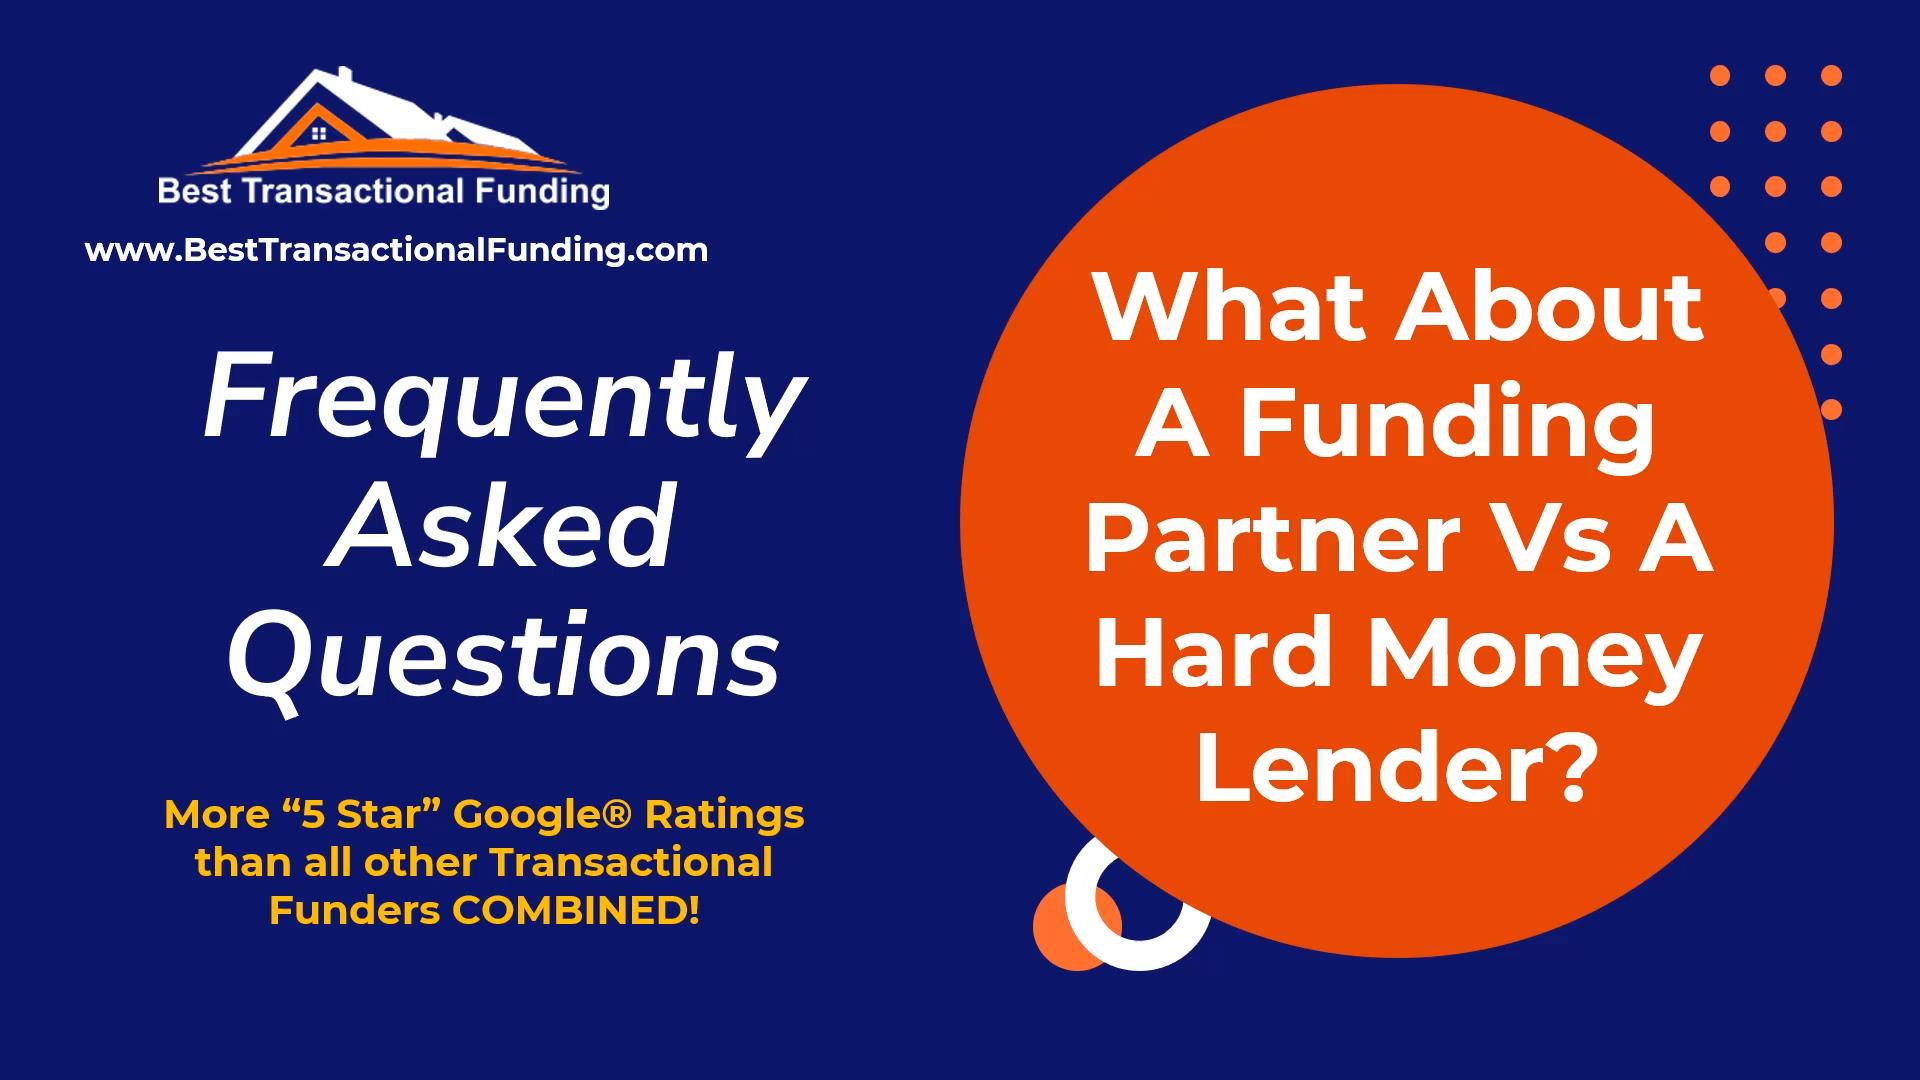 Funding Partner Versus a Hard Money Lender